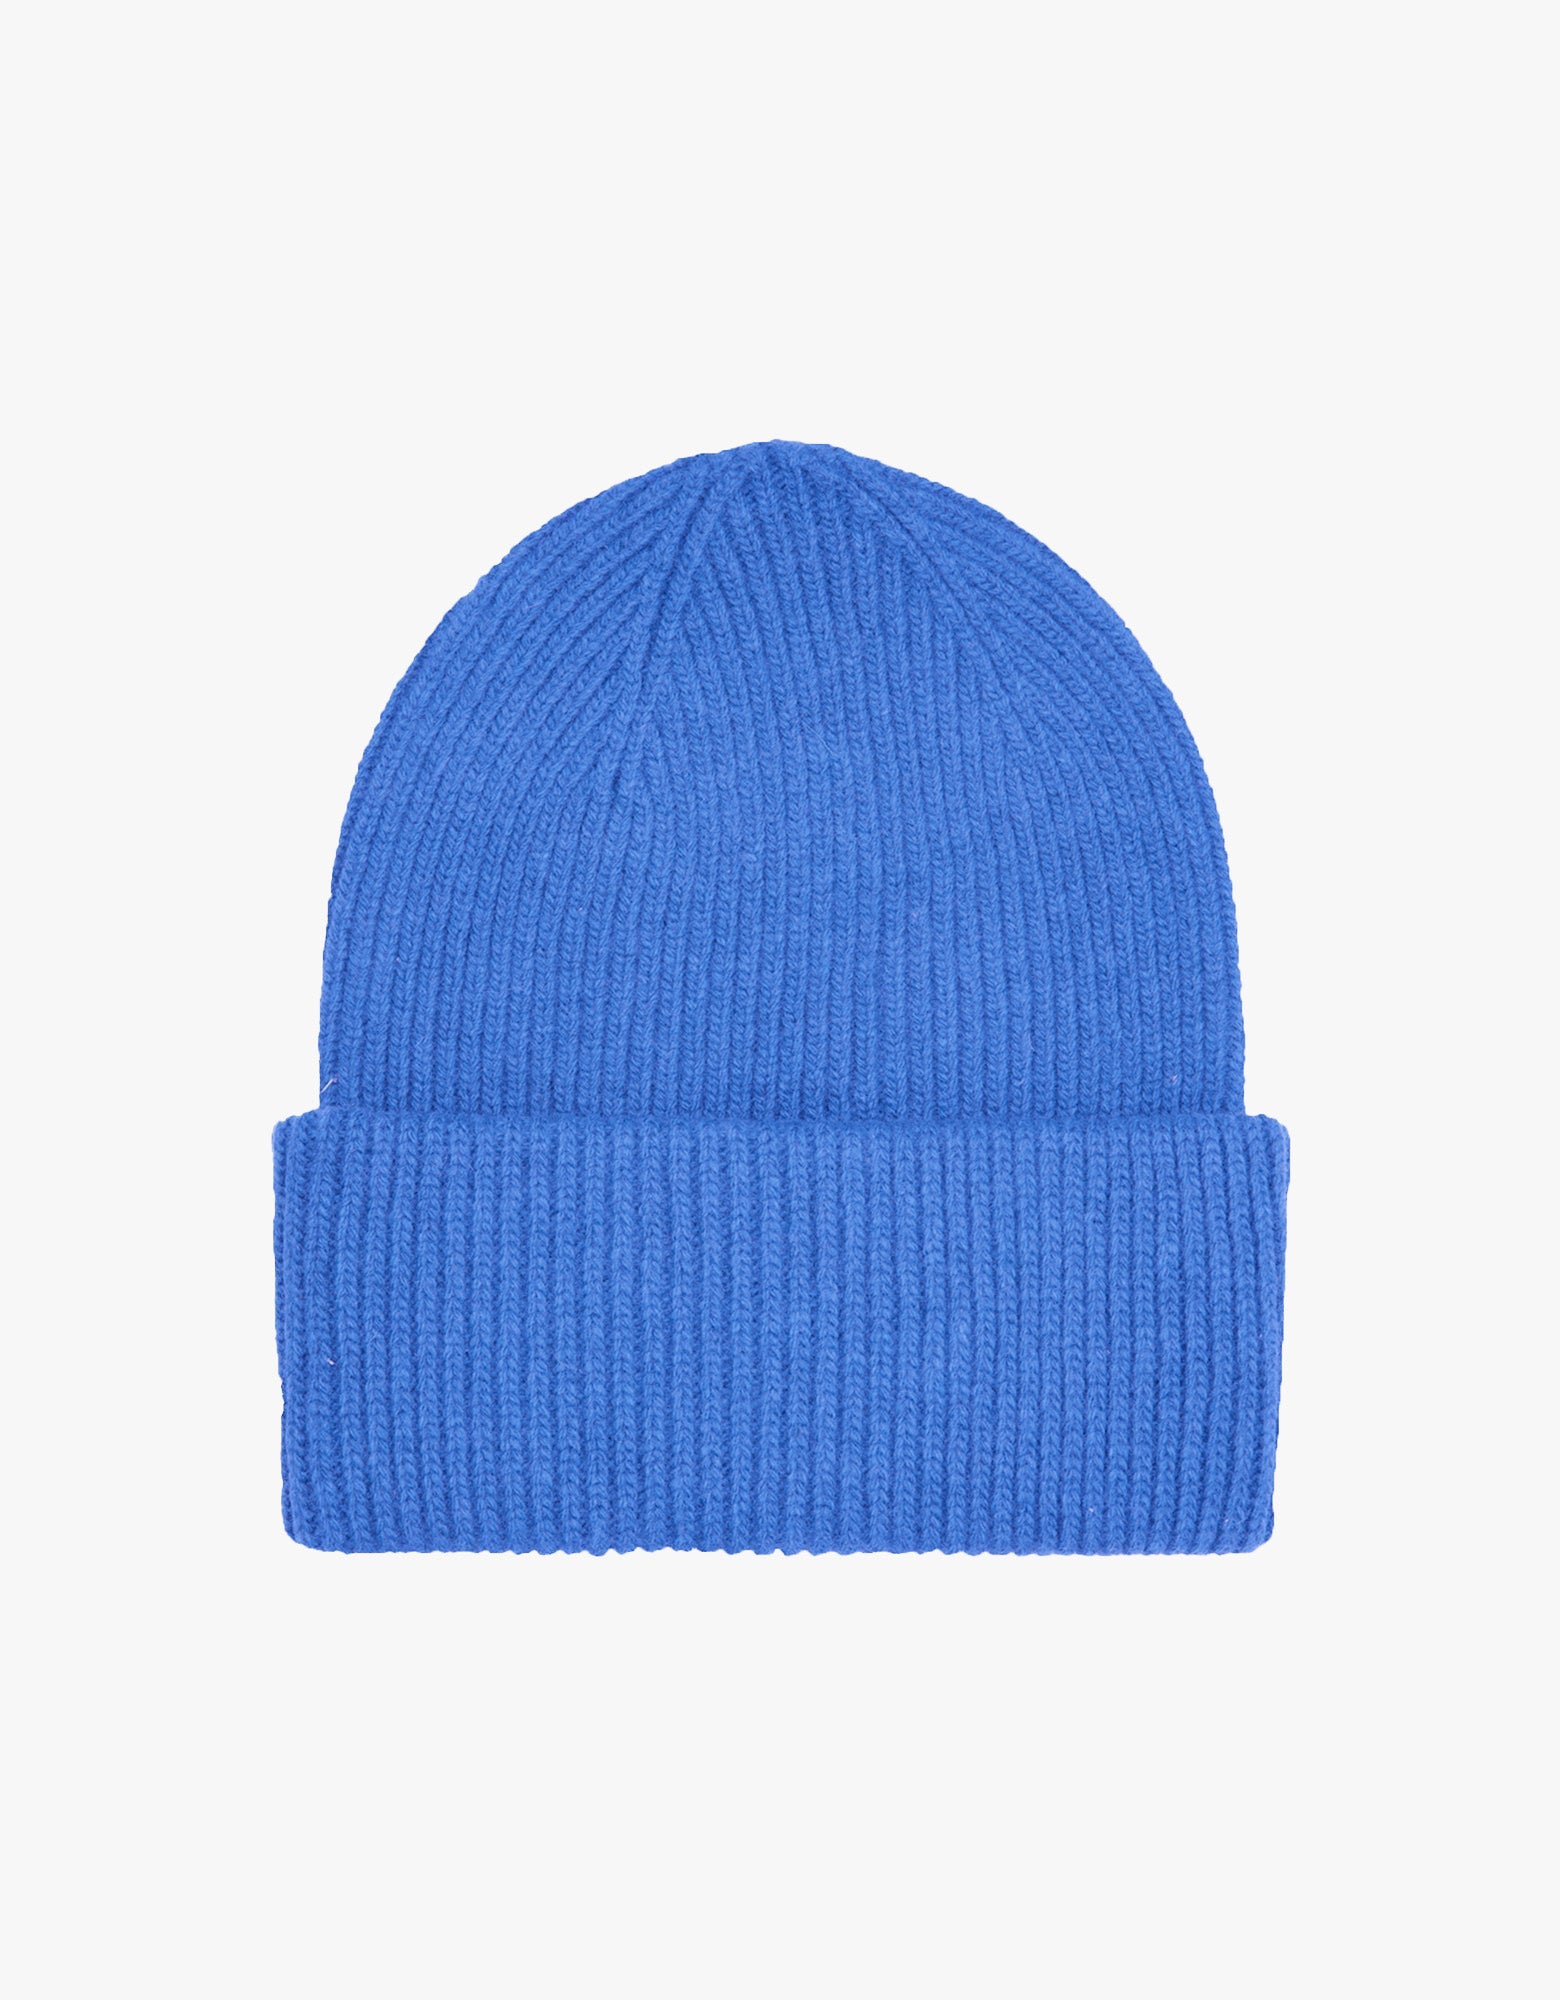 Merino Wool Hat - Pacific Blue